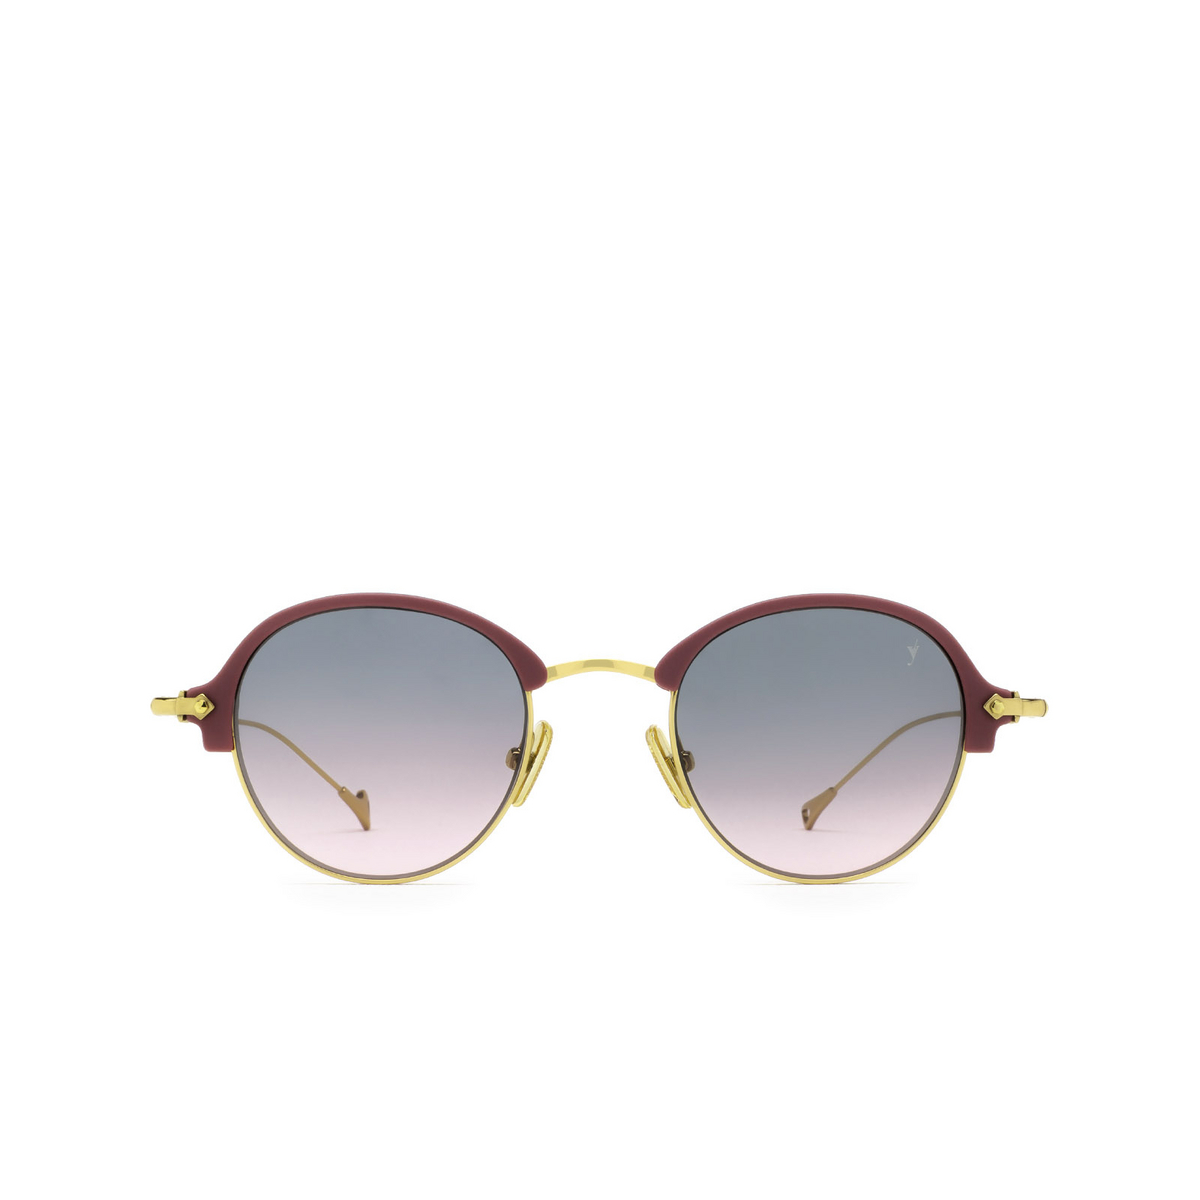 Eyepetizer® Round Sunglasses: Robert color Cyclamen Matt C.Q-4-20 - front view.